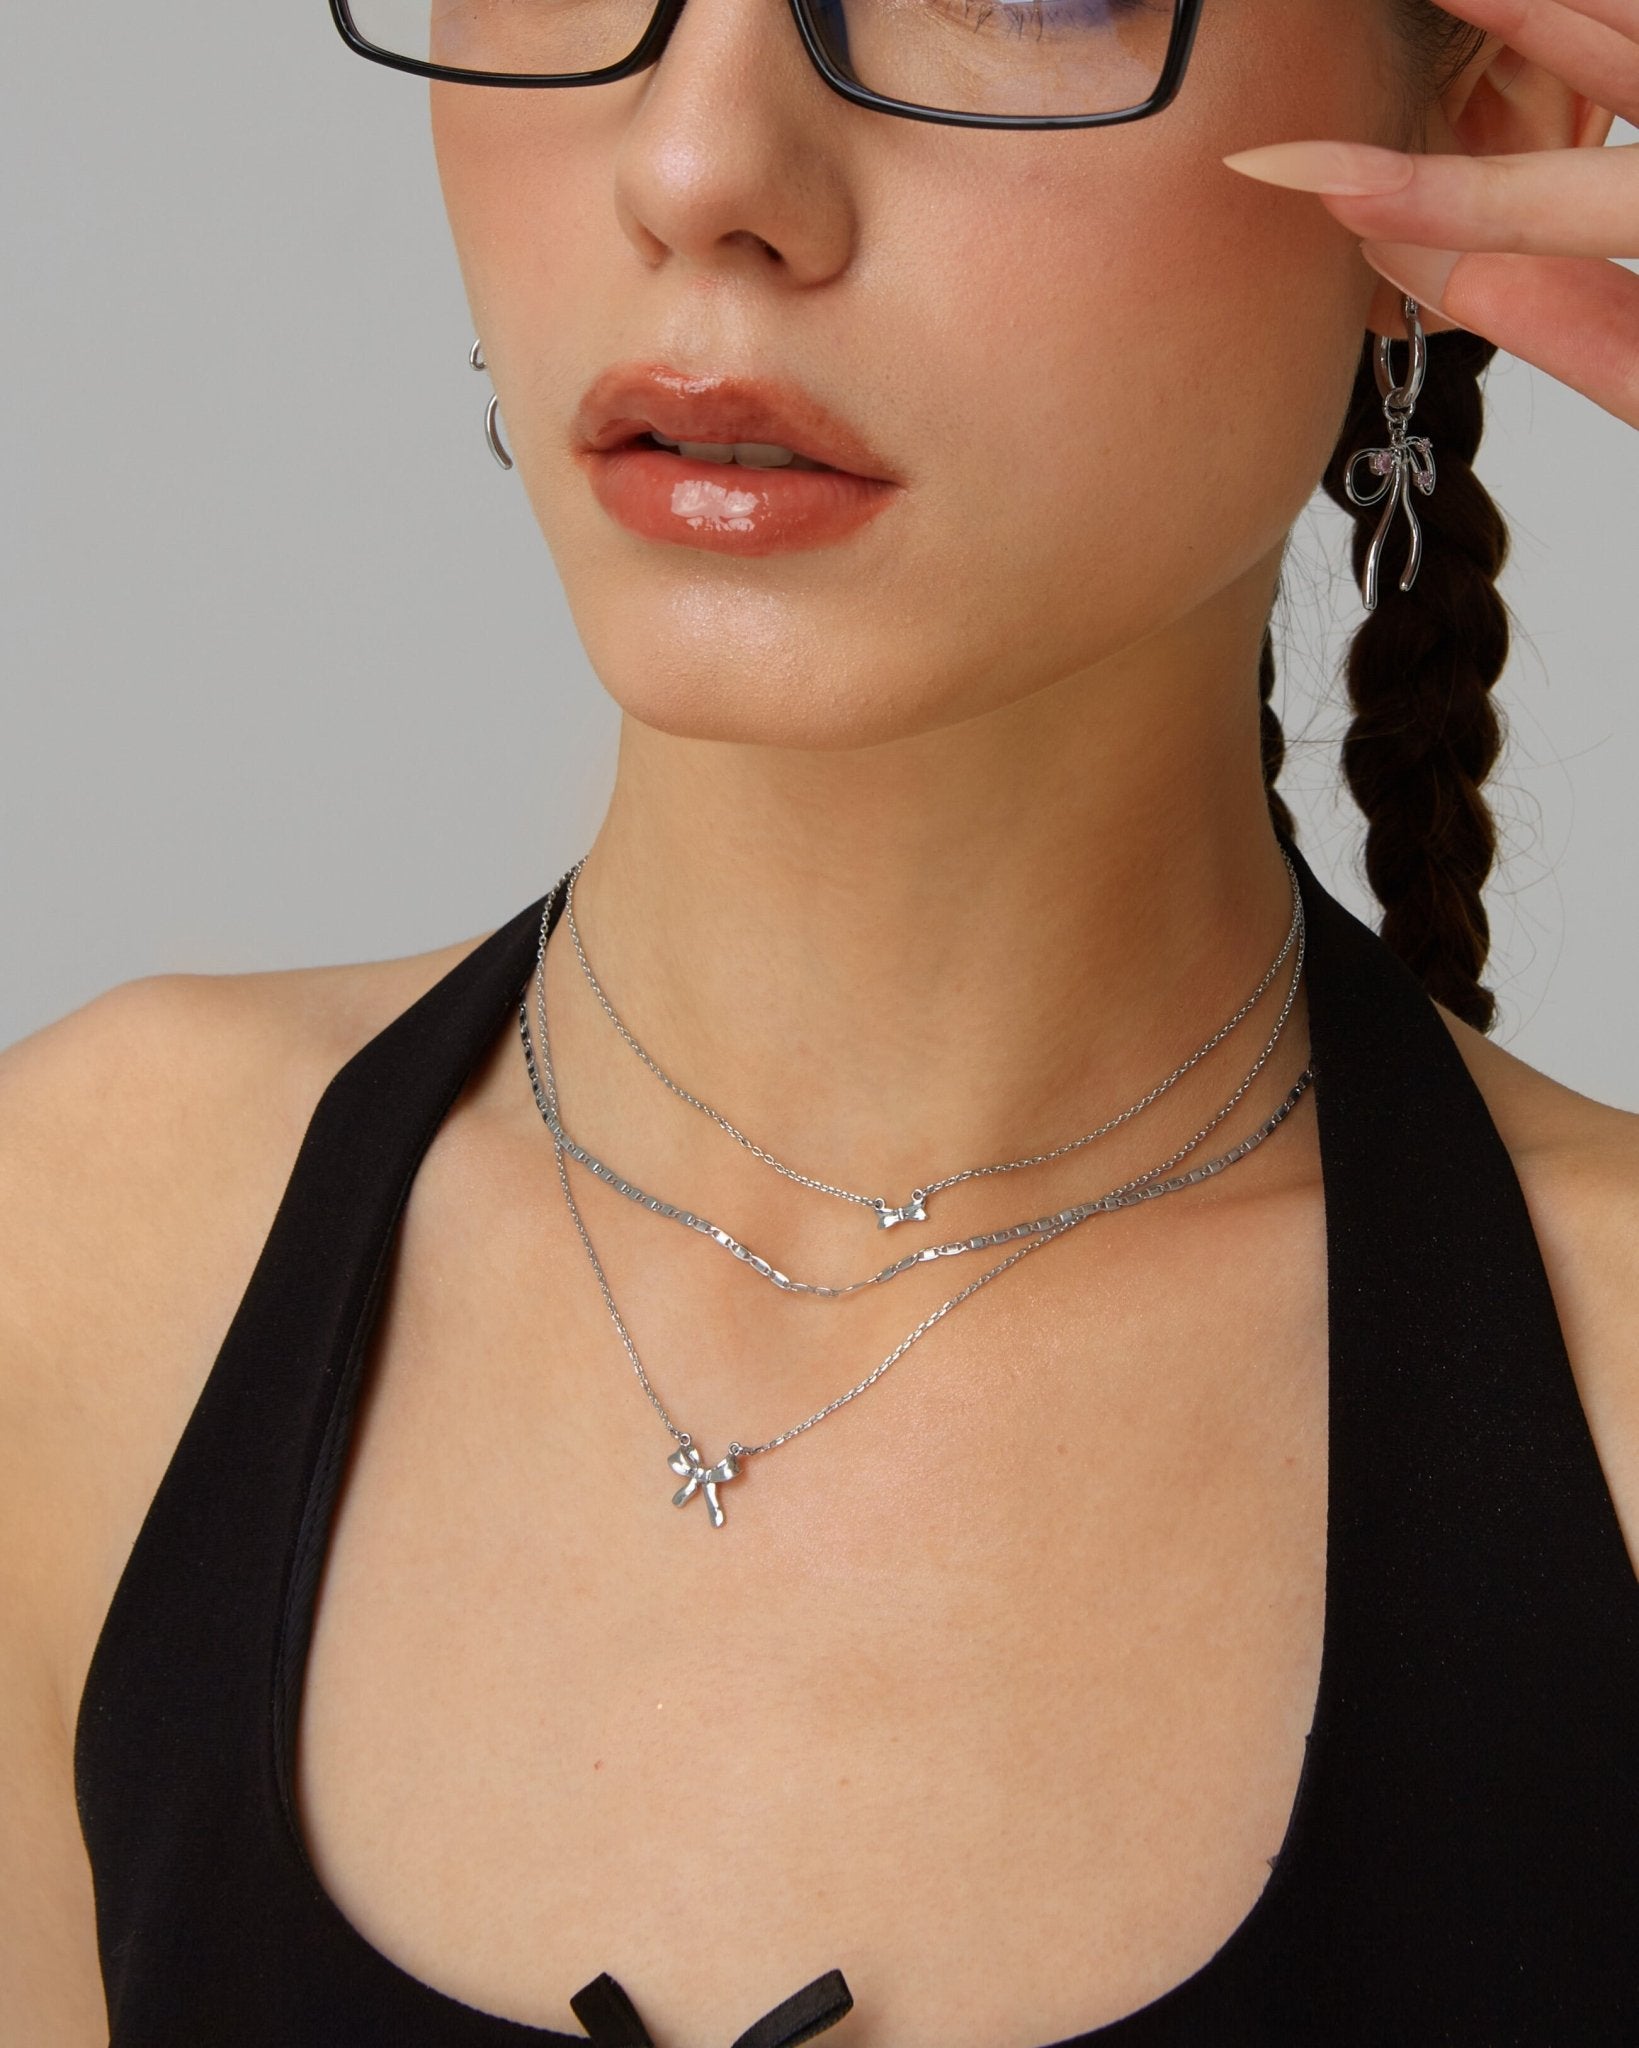 Caroline Mariner Necklace in Silver